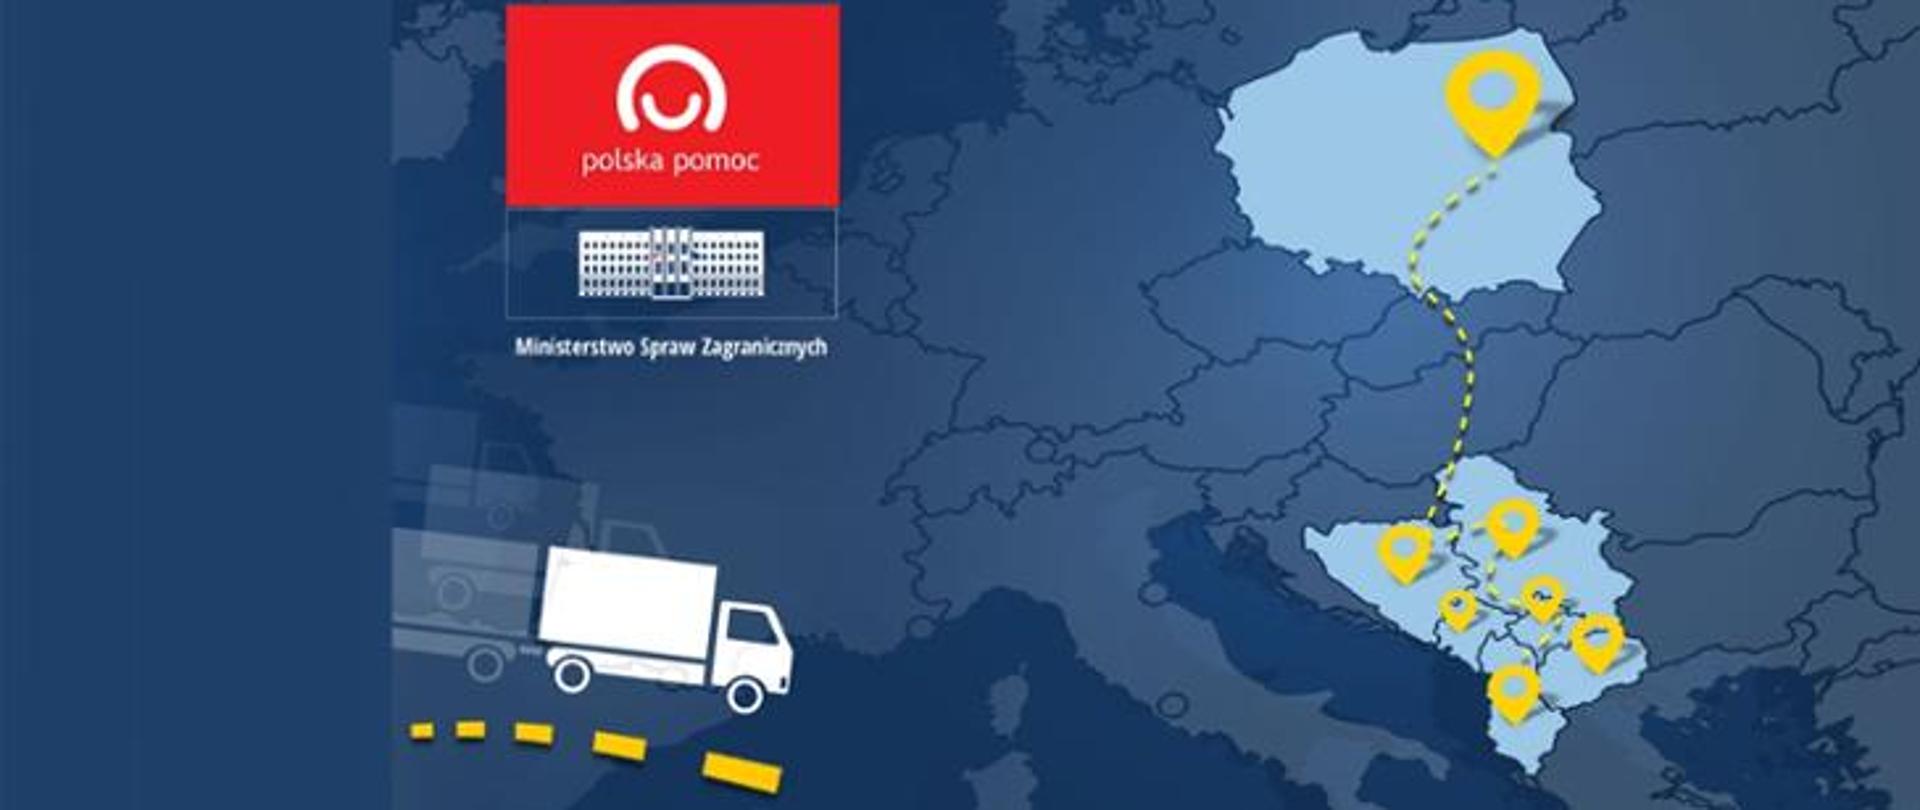 Polish aid for Western Balkans